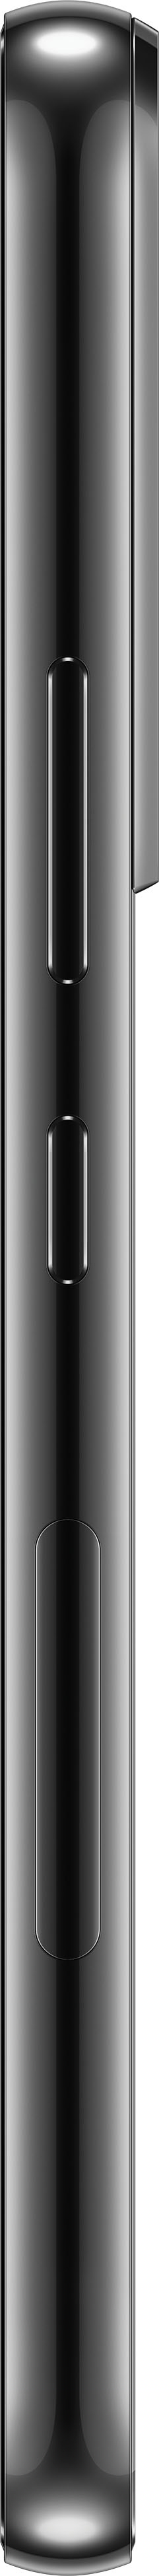 Samsung Galaxy S22 5G SM-S901U1 256GB Black (US Model) - Factory Unlocked  Cell Phone - Very Good Condition 